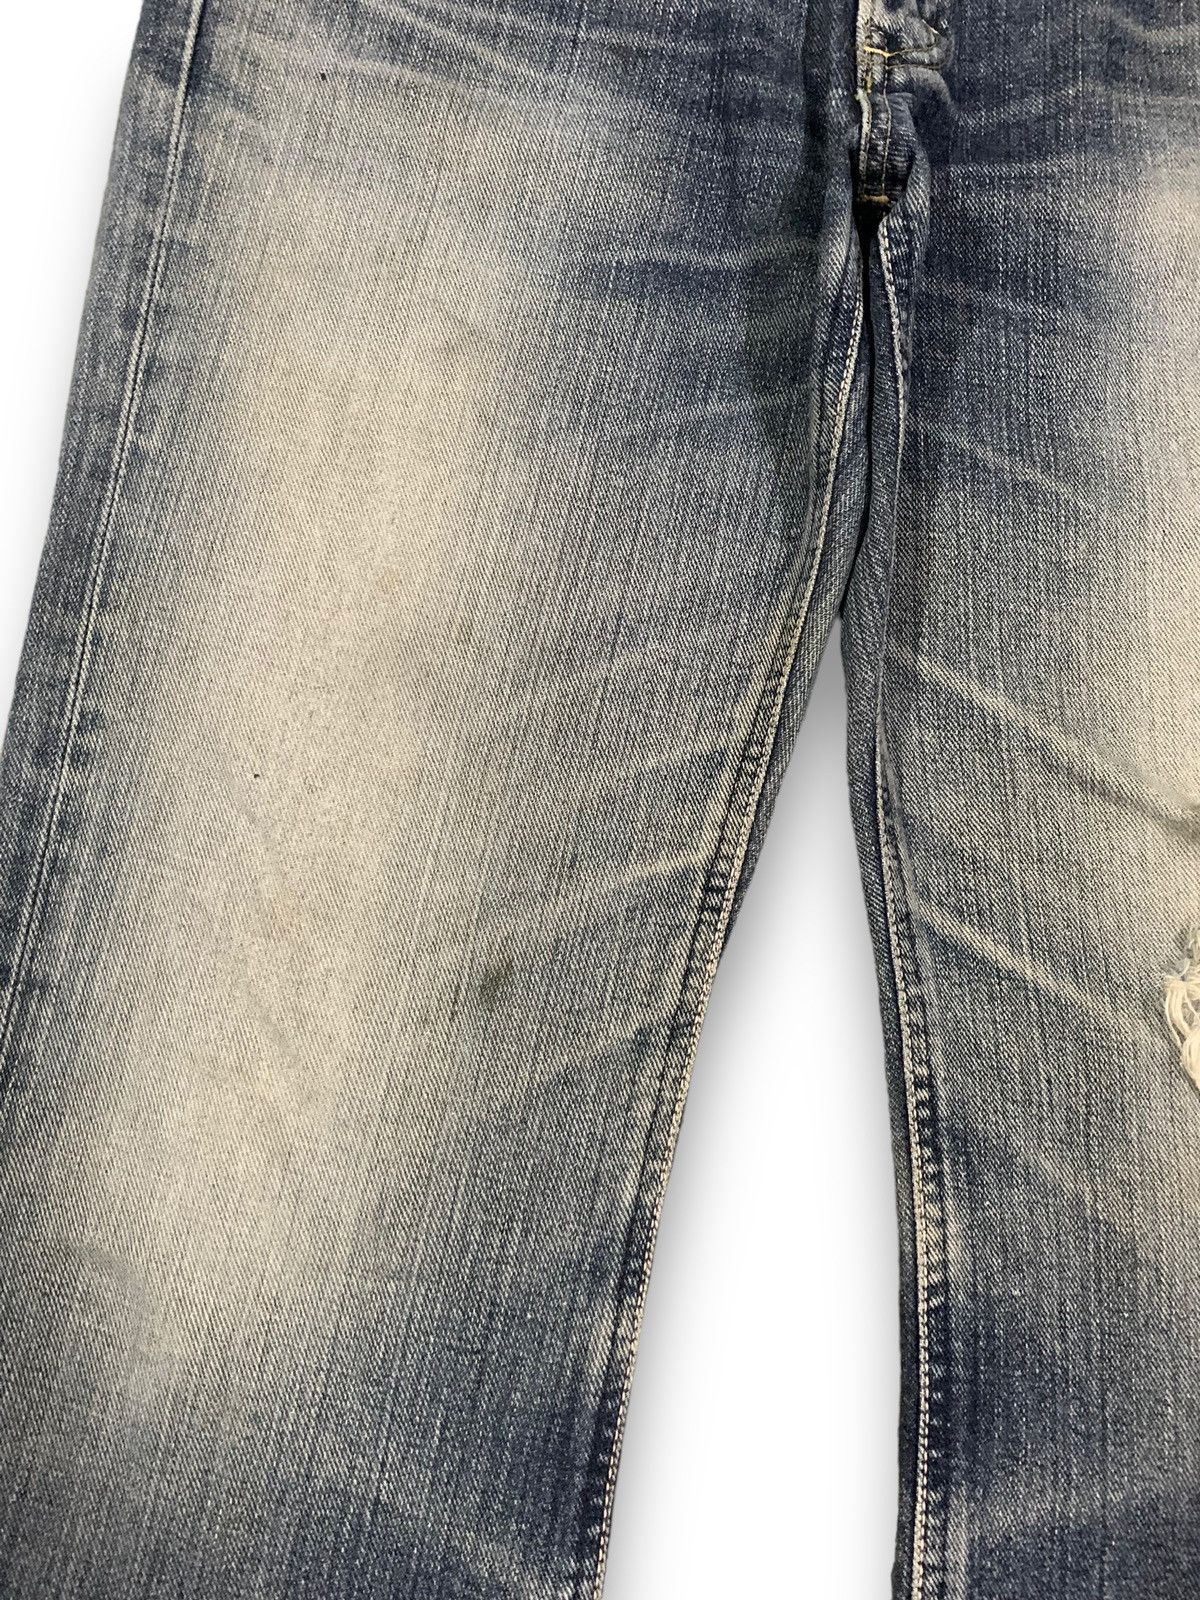 Lee Vintage Lee Cowboy Sanforized Distressed Flared Jeans Size US 31 - 7 Thumbnail